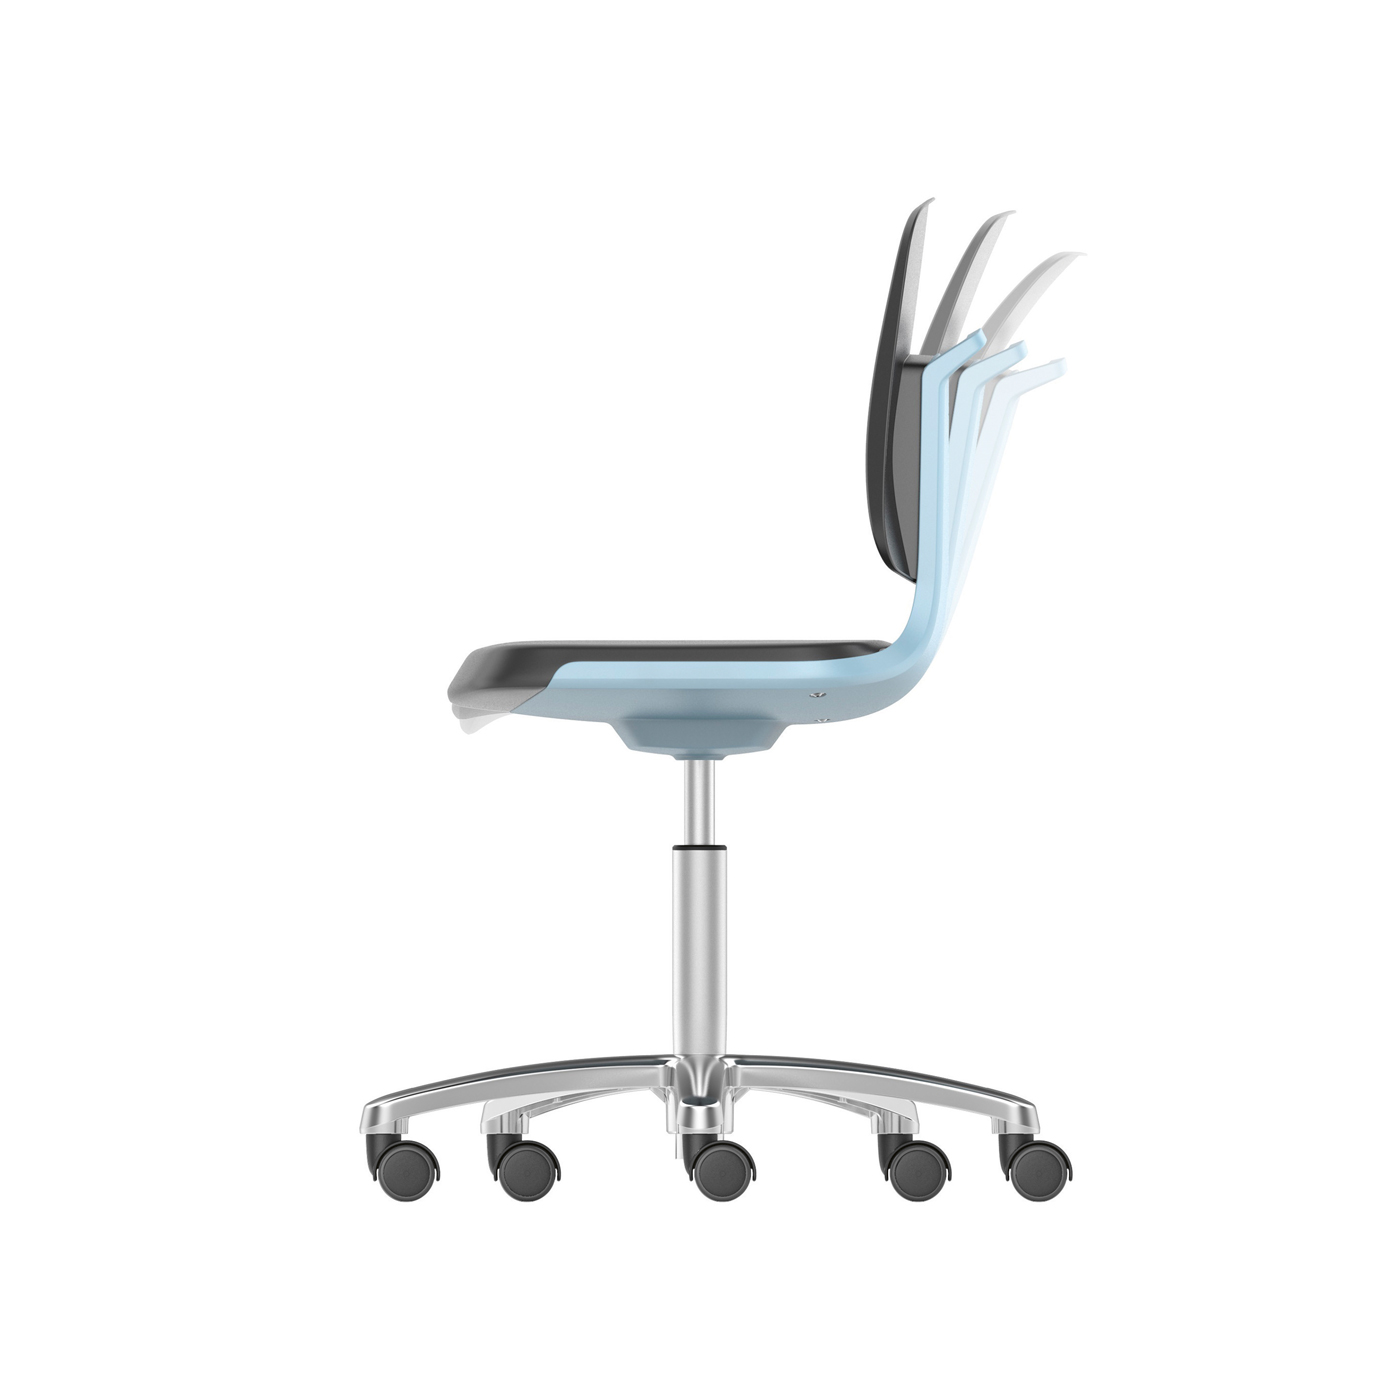 Labsit Swivel Chair, Green/Black - 1 piece